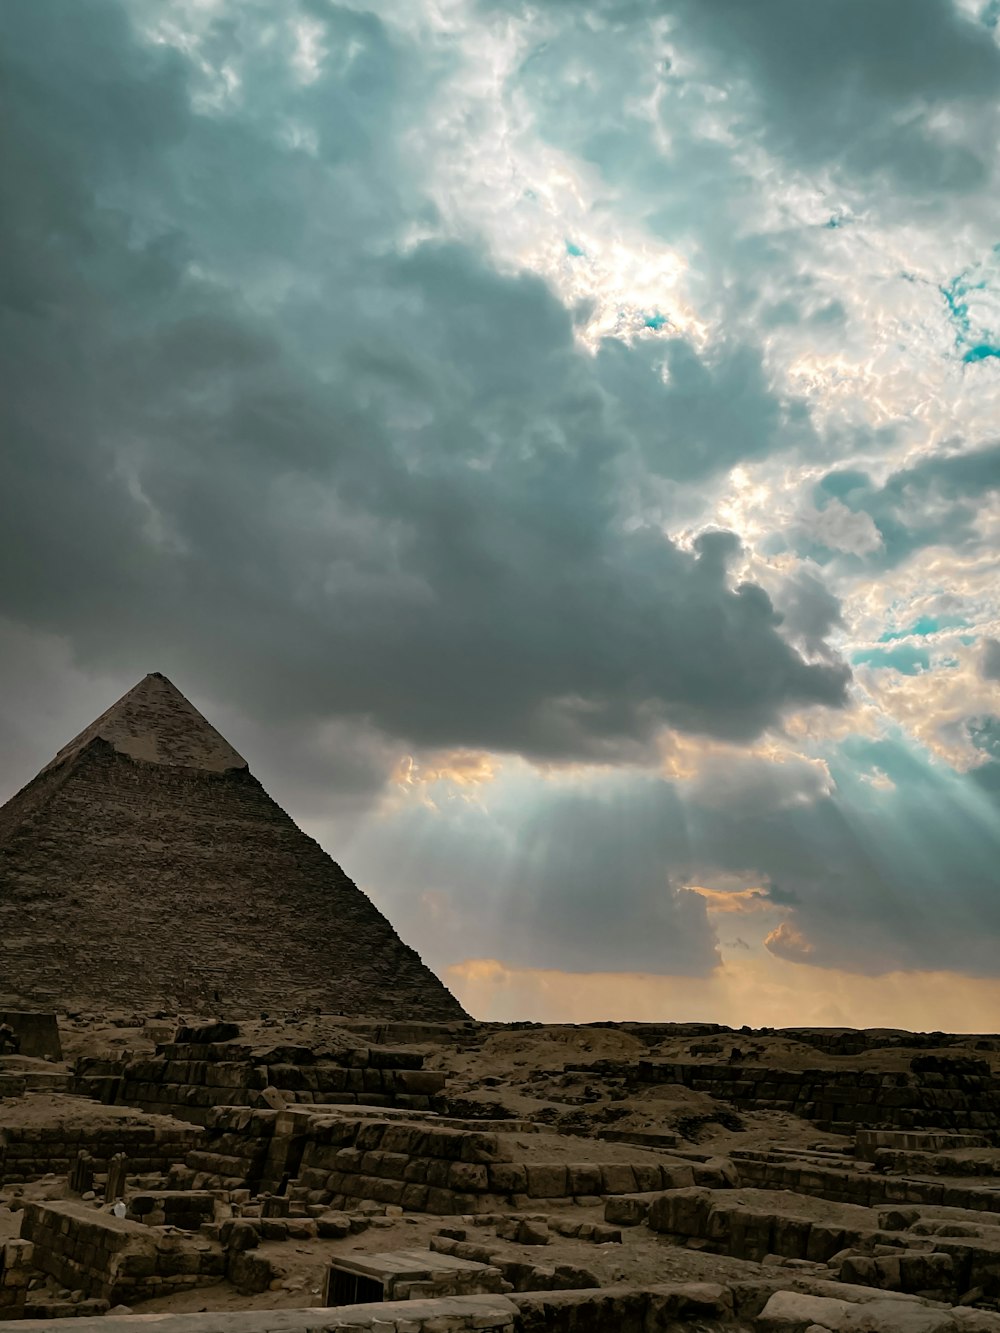 a very tall pyramid under a cloudy sky